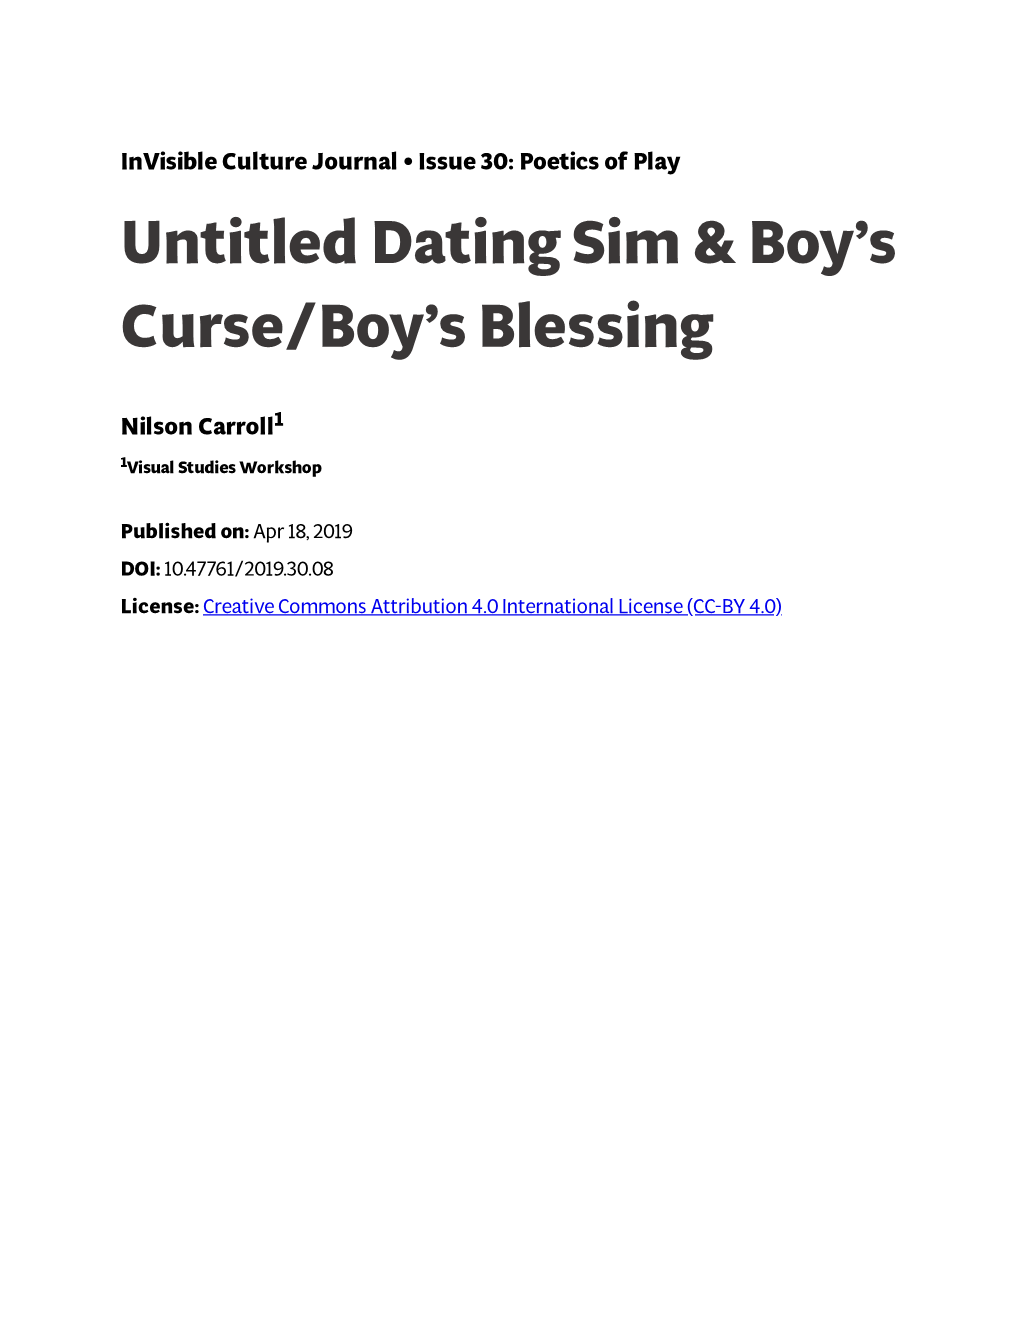 Untitled Dating Sim & Boyˇs Curse/Boyˇs Blessing